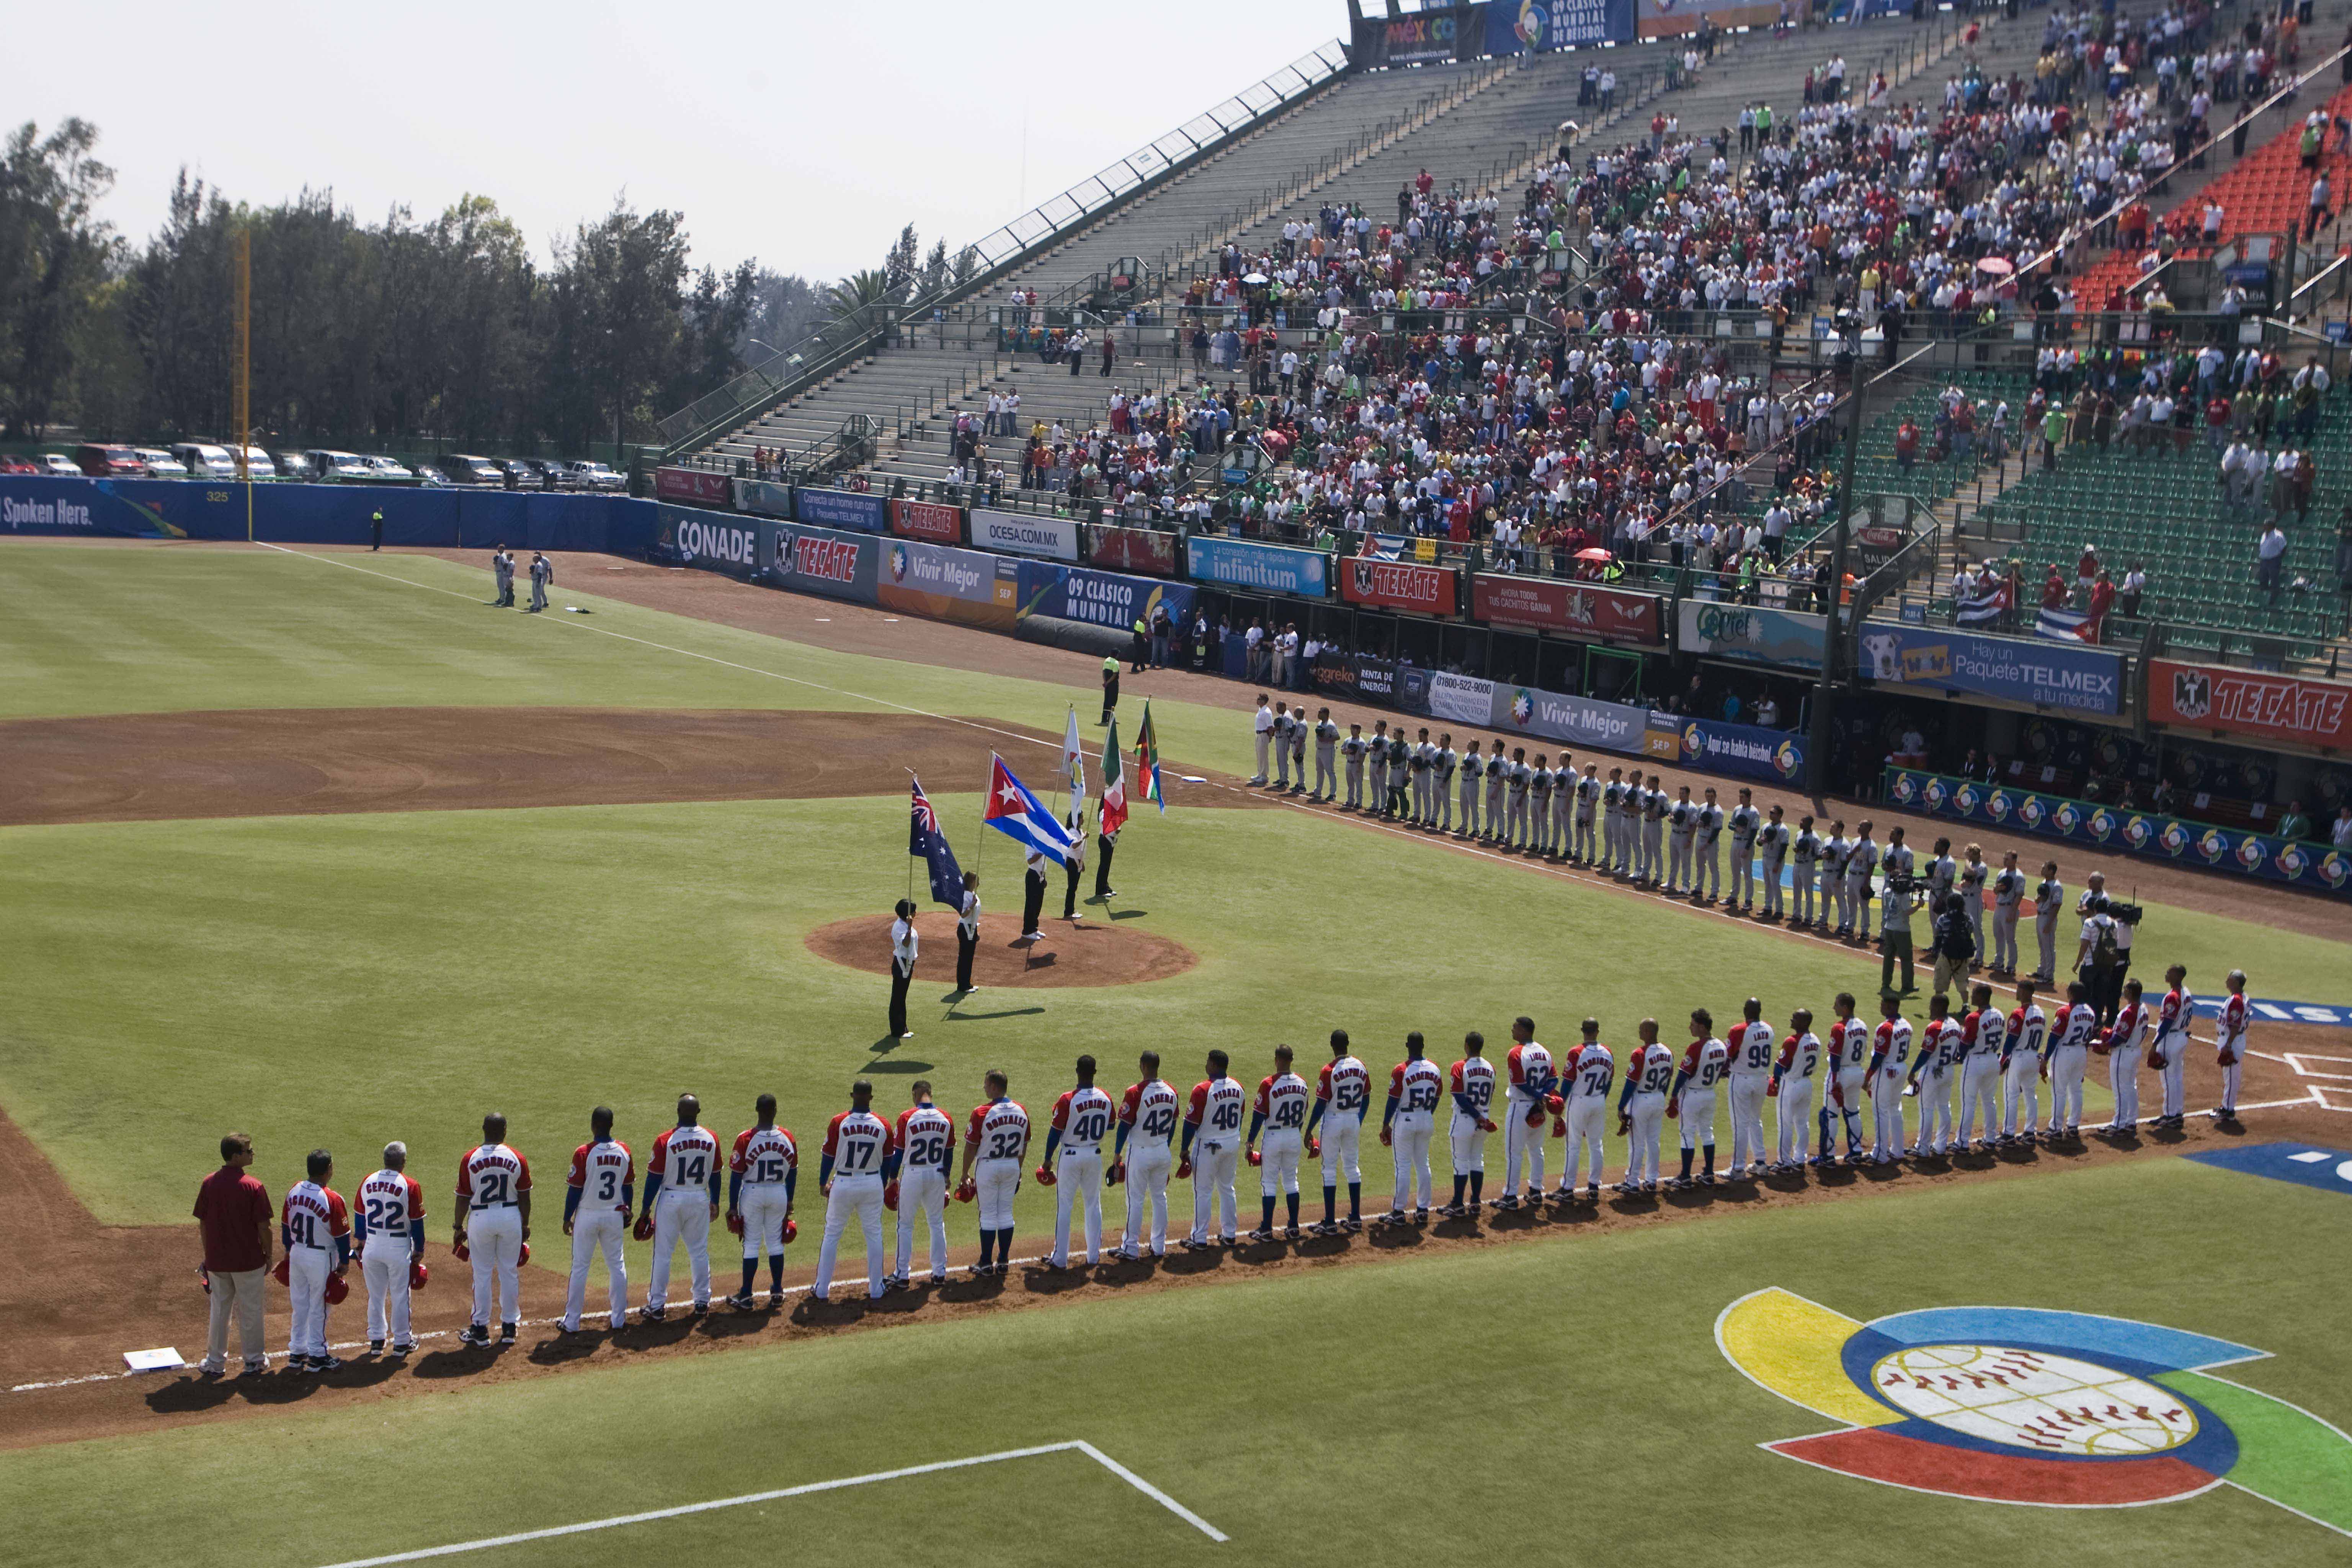 Poderoso! Roster de México para el Clásico Mundial de Beisbol 2023